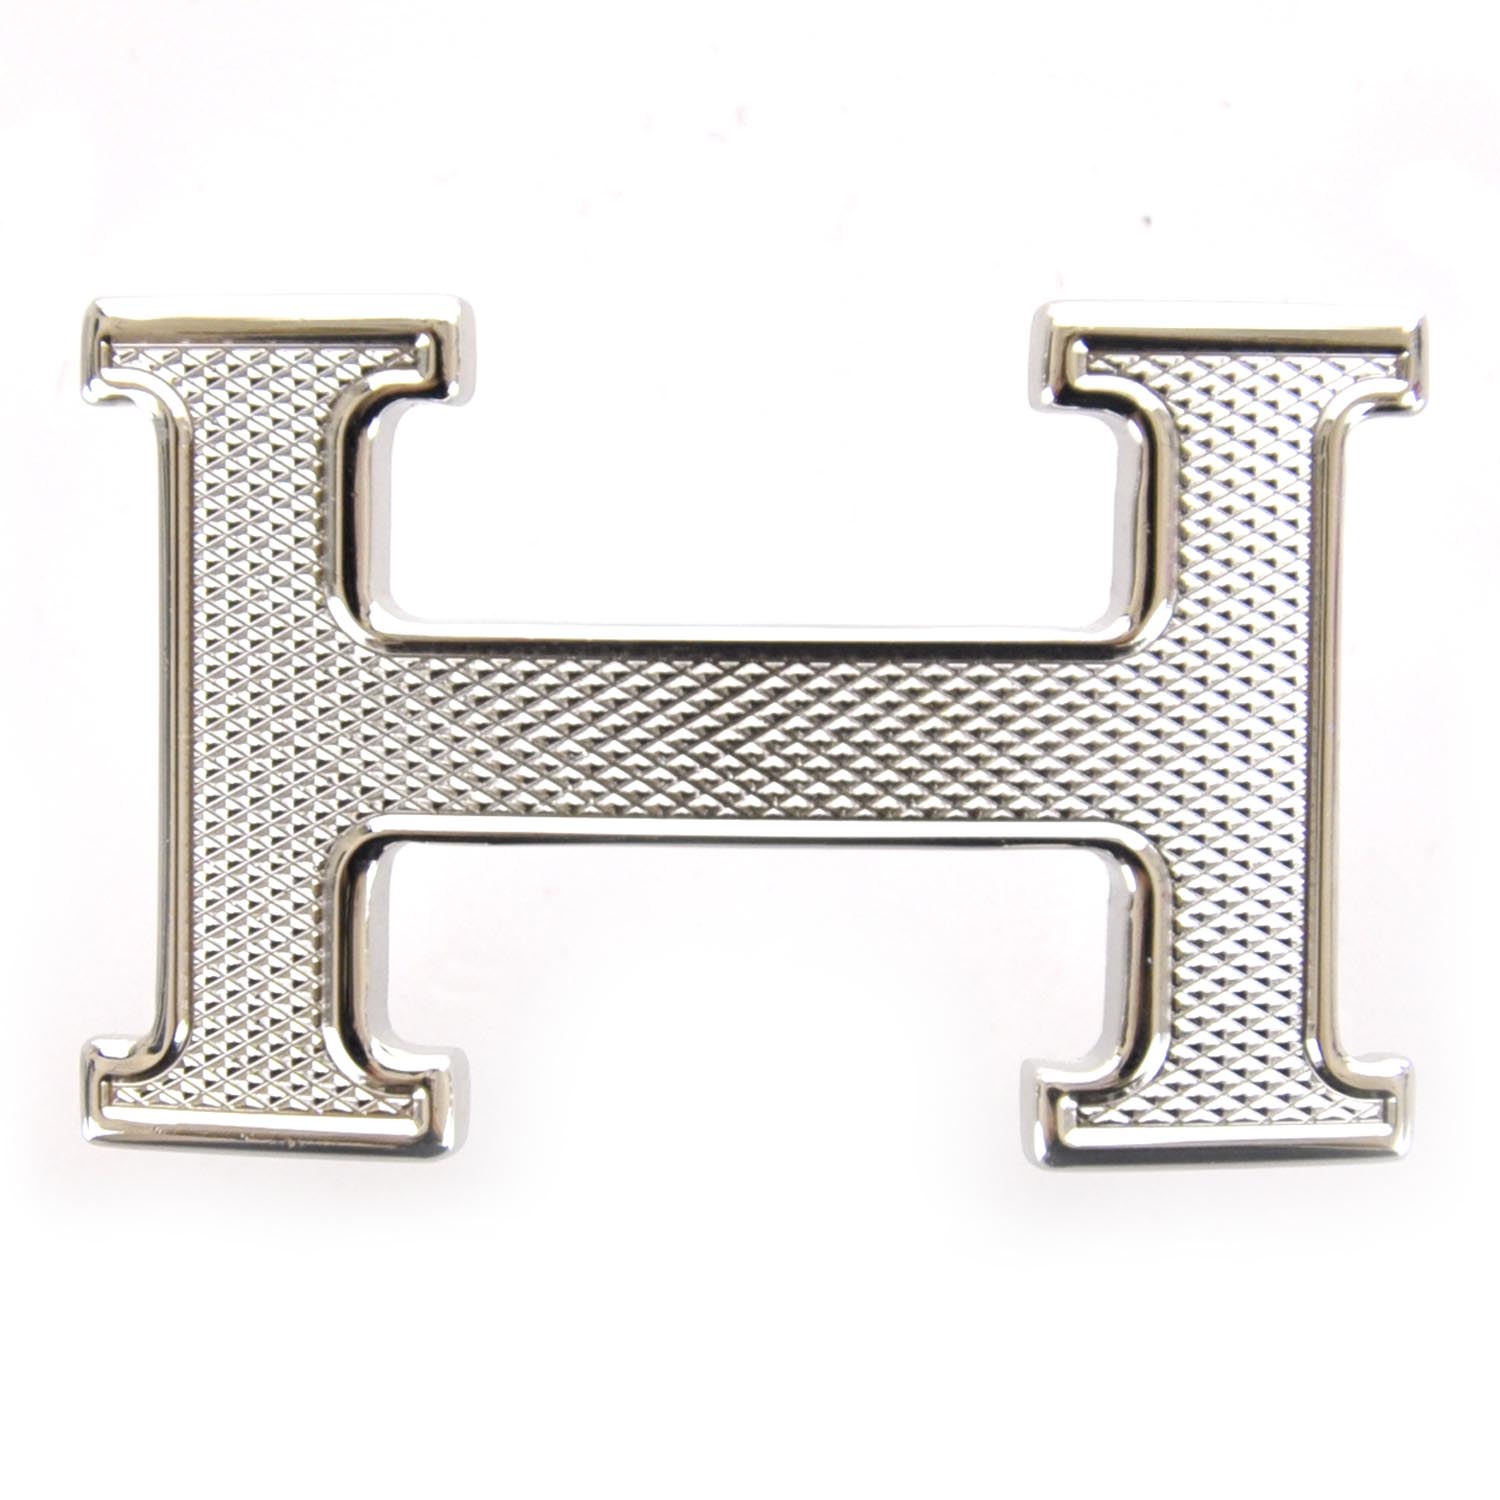 hermes logo belt buckle